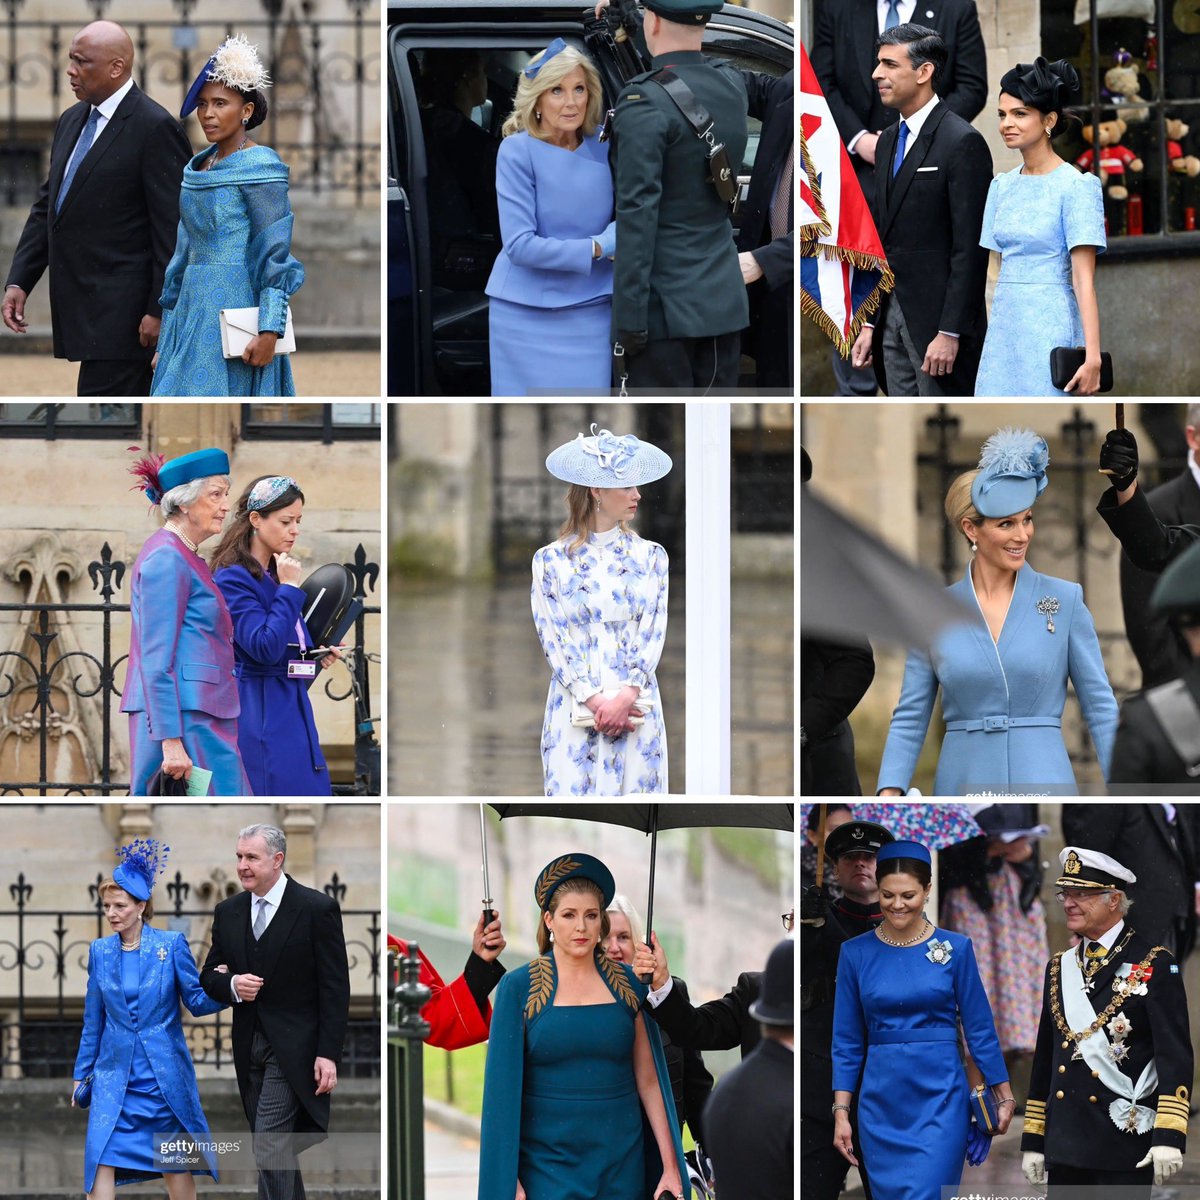 Coronation Fashion: Blue Edition
#getty #fashion #Coronation #style #royalfashion